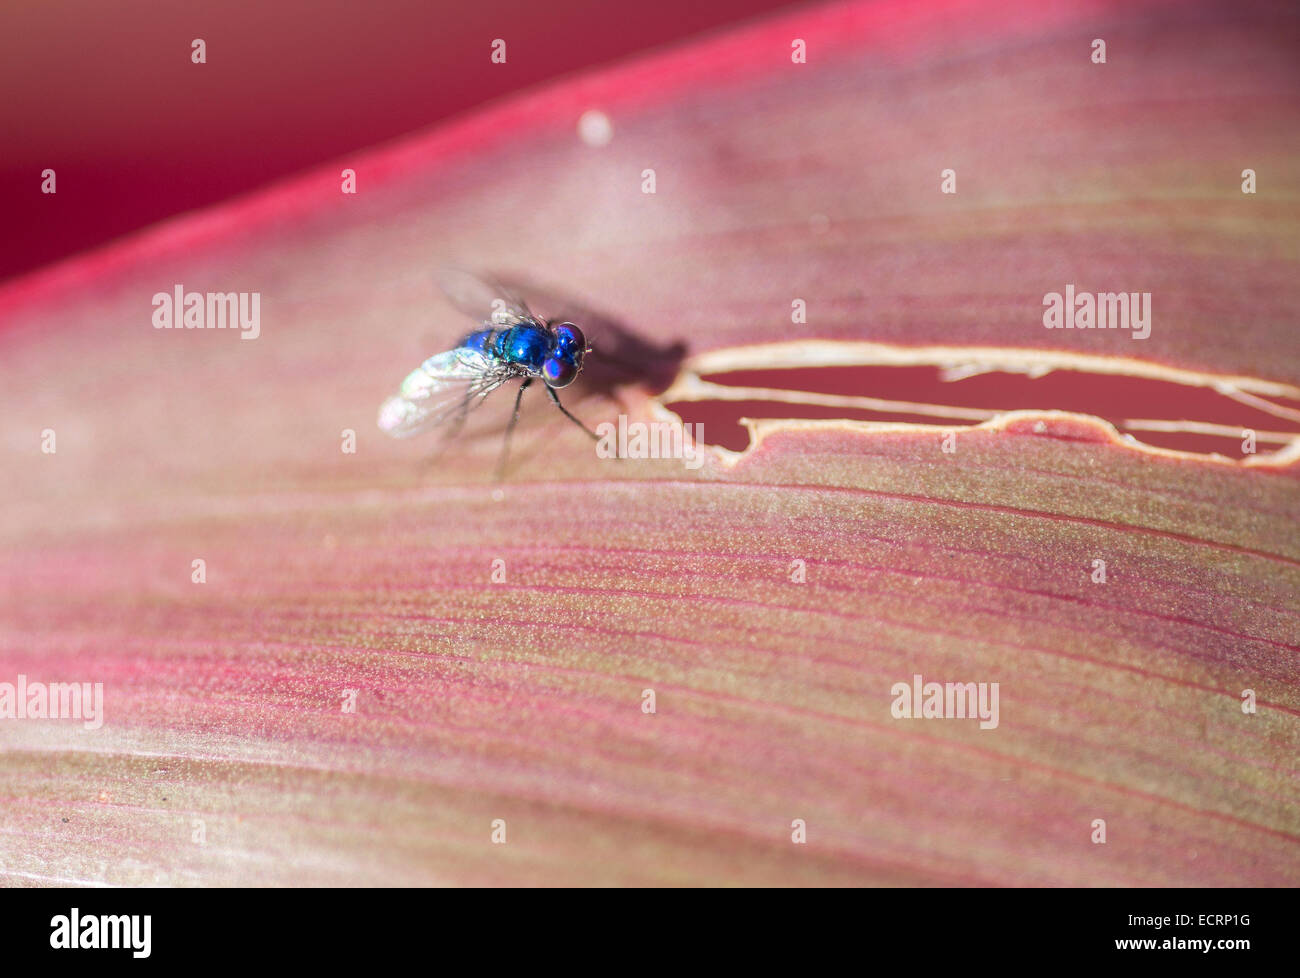 Tiny blue fly on plant leaf Stock Photo